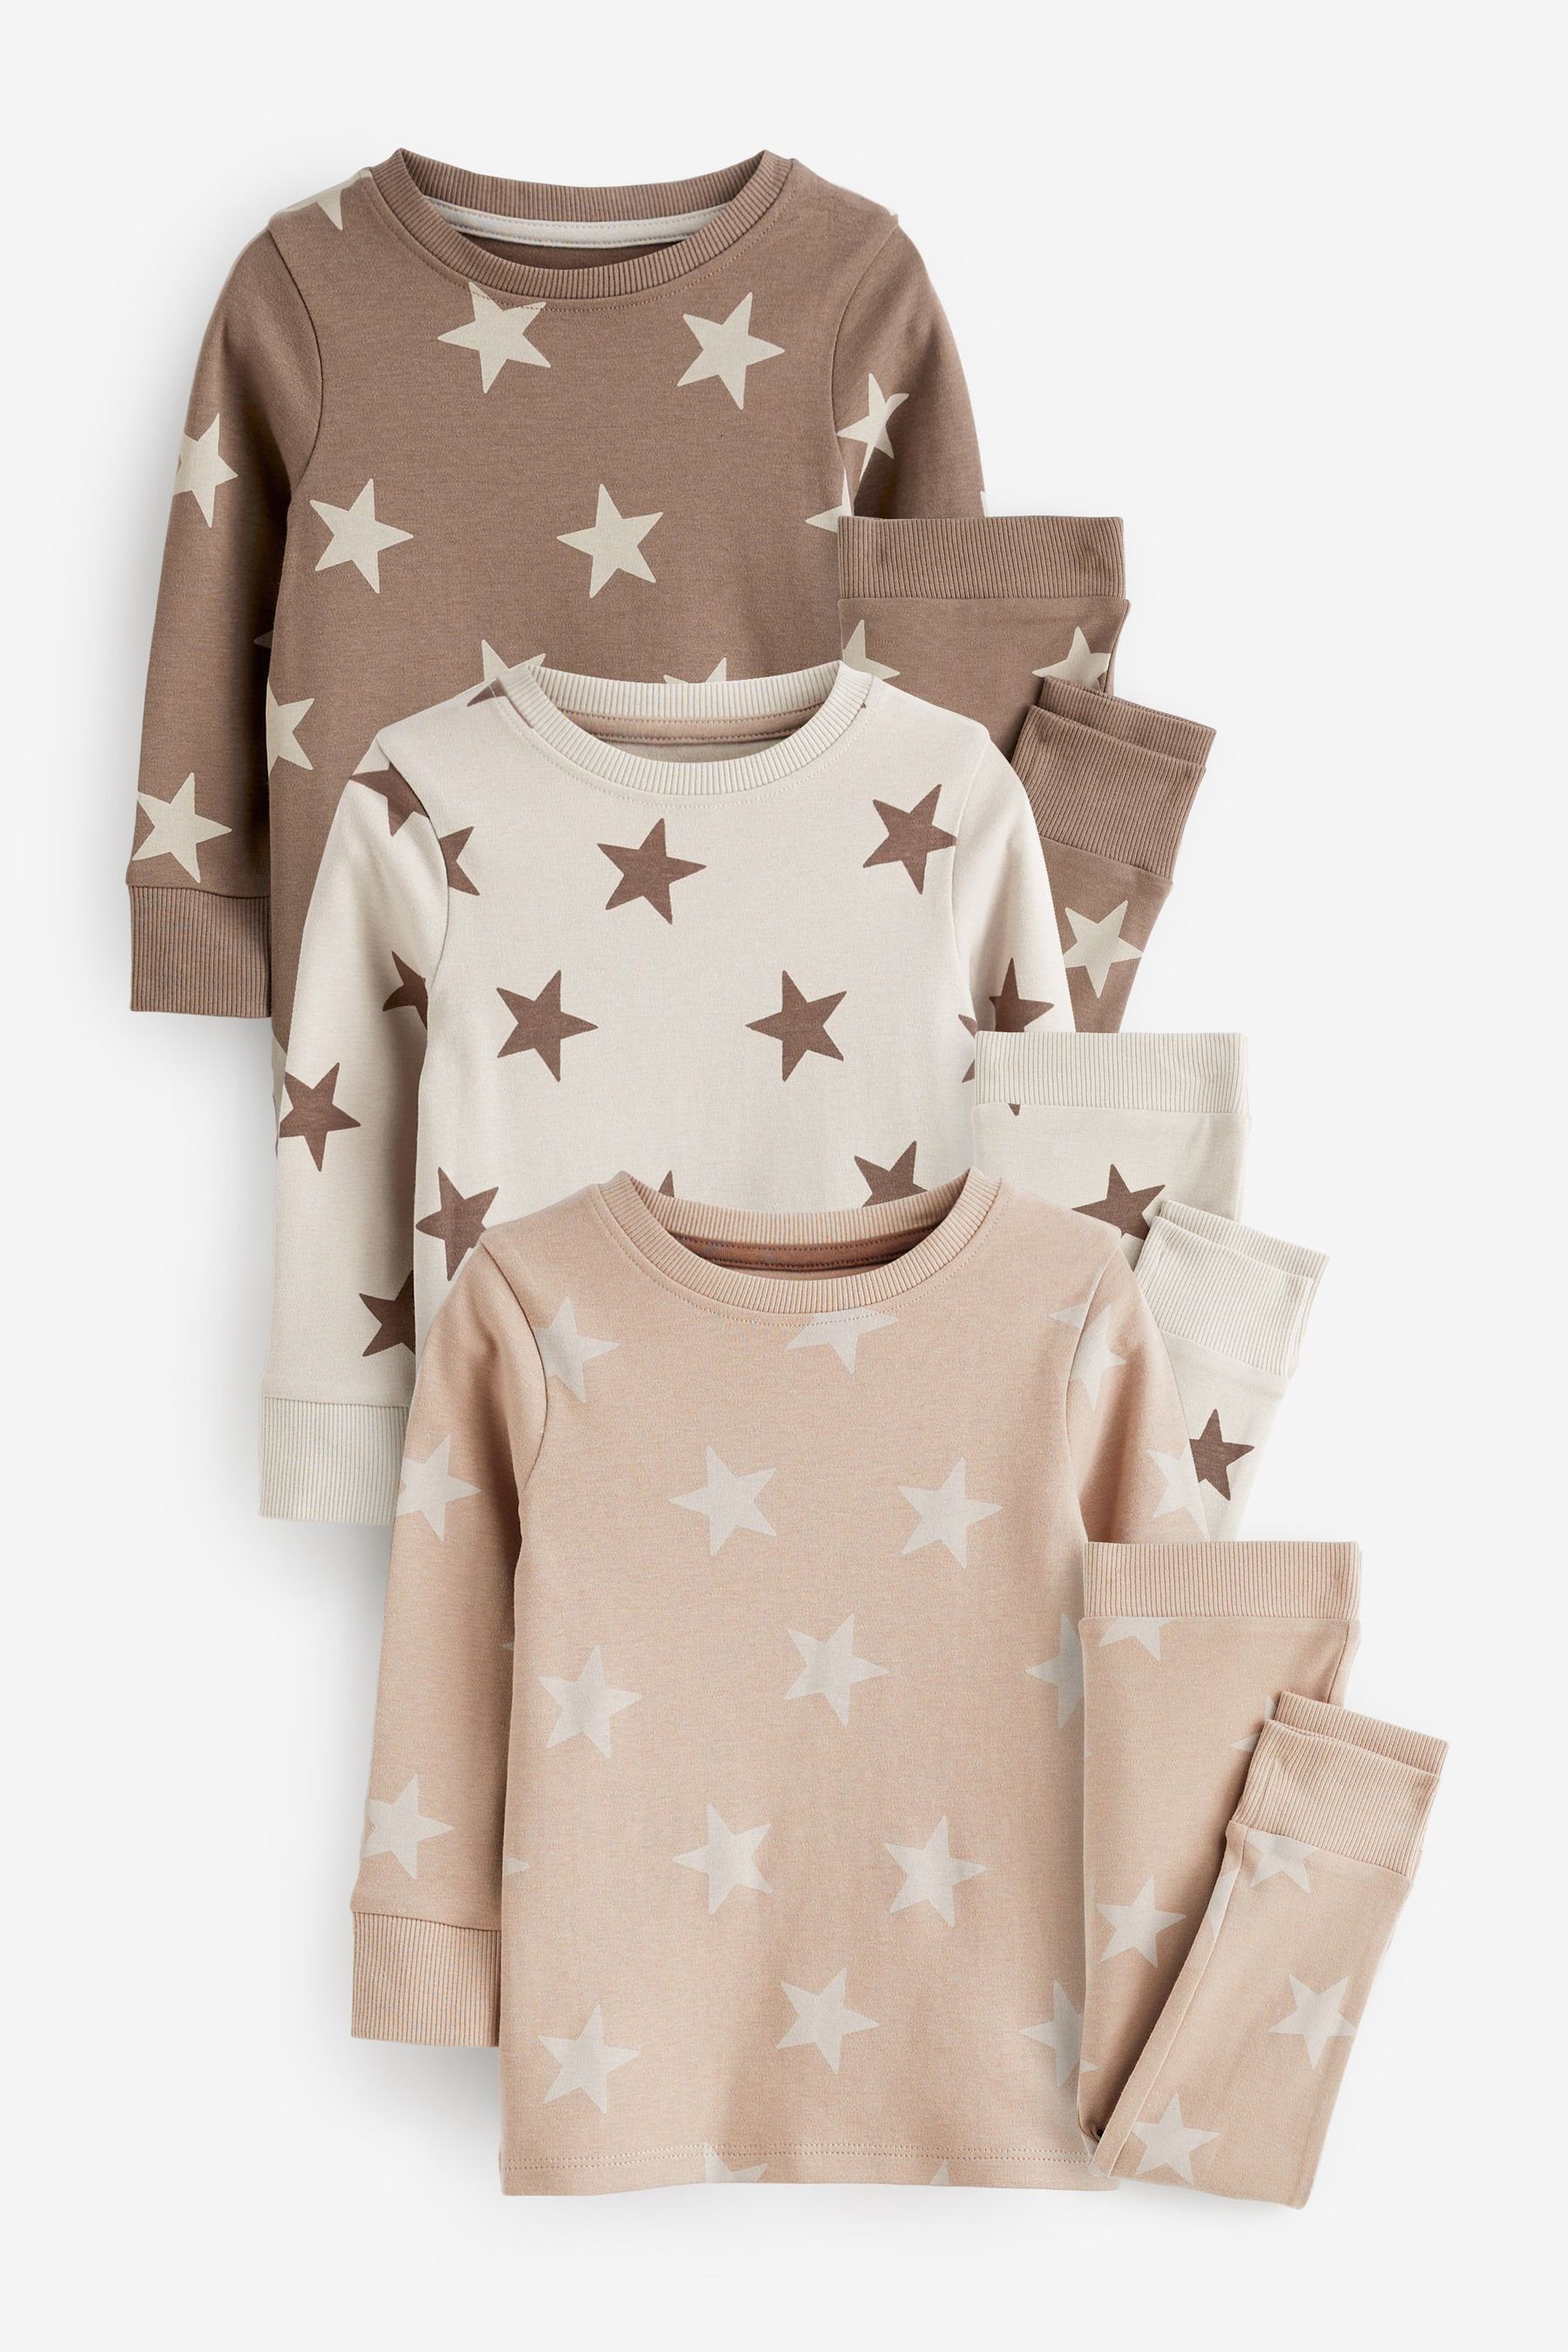 Next Pyjama Kuschelpyjamas, 3er-Pack (6 tlg) Neutral Star